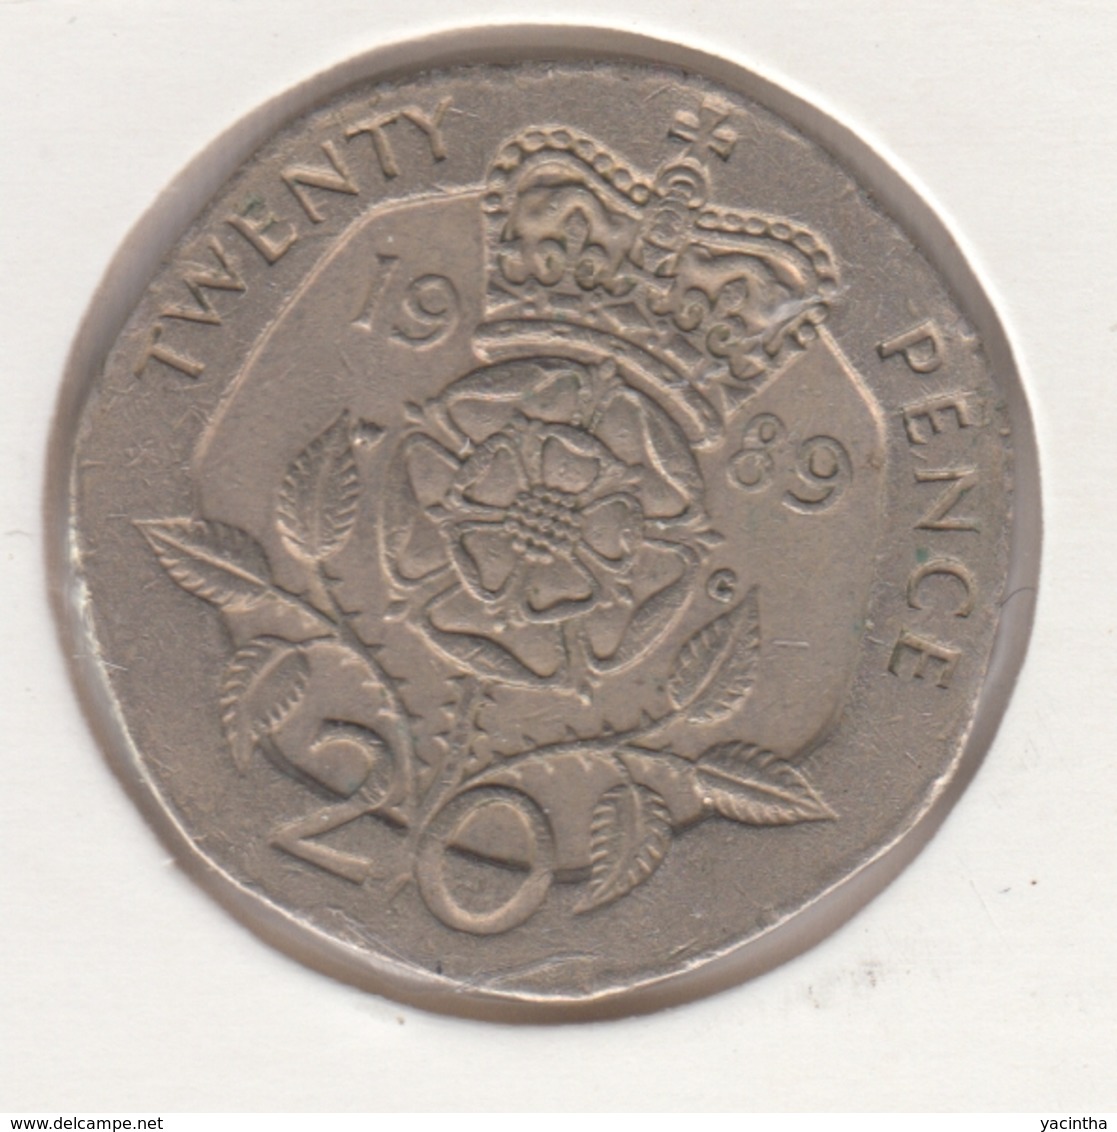 @Y@   Groot Brittanië   20 Pence 1989  (4793) - 1 Pound